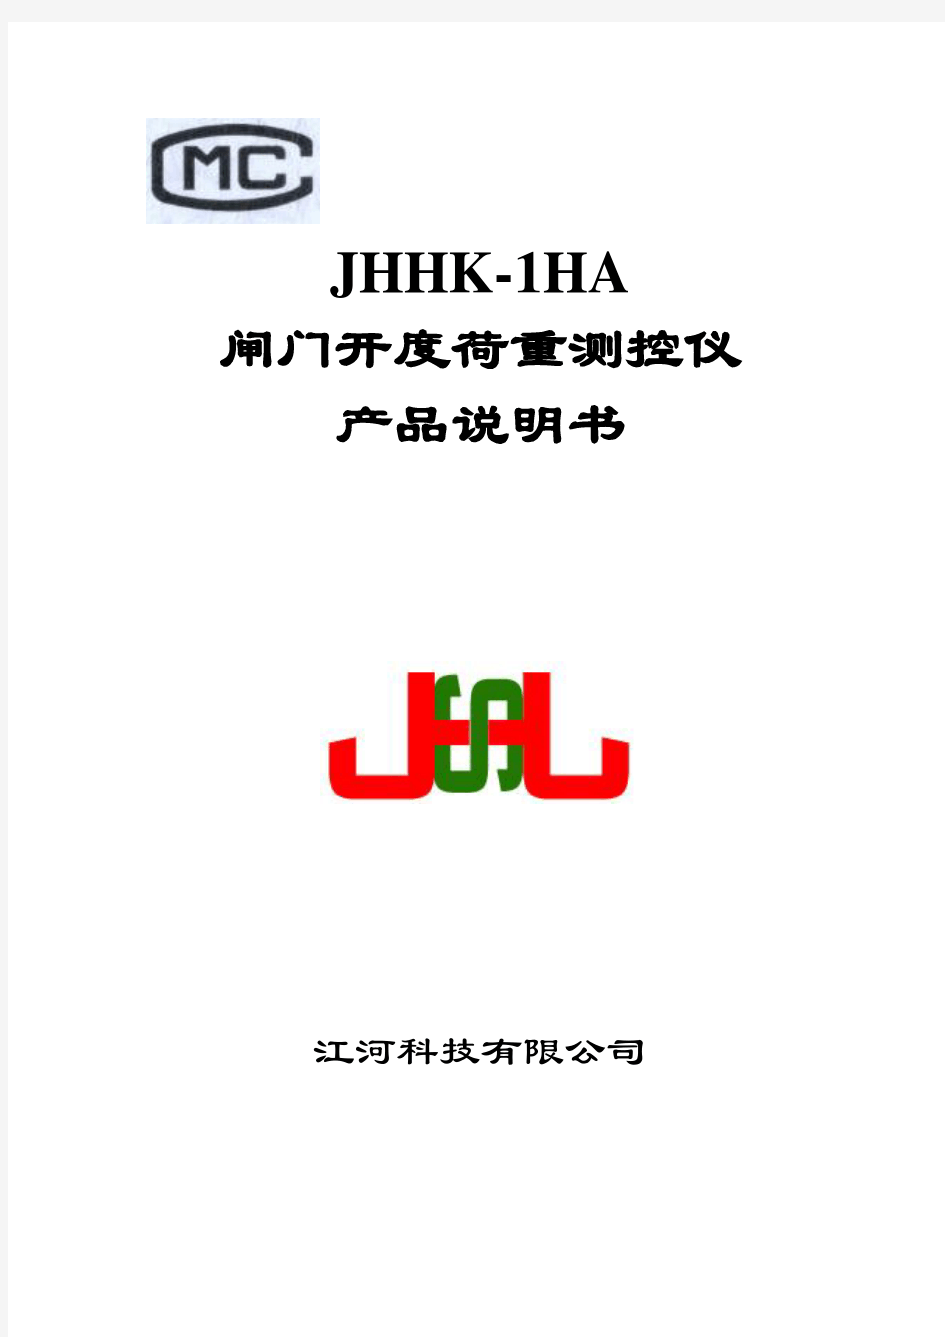 JHHK-1HA说明书